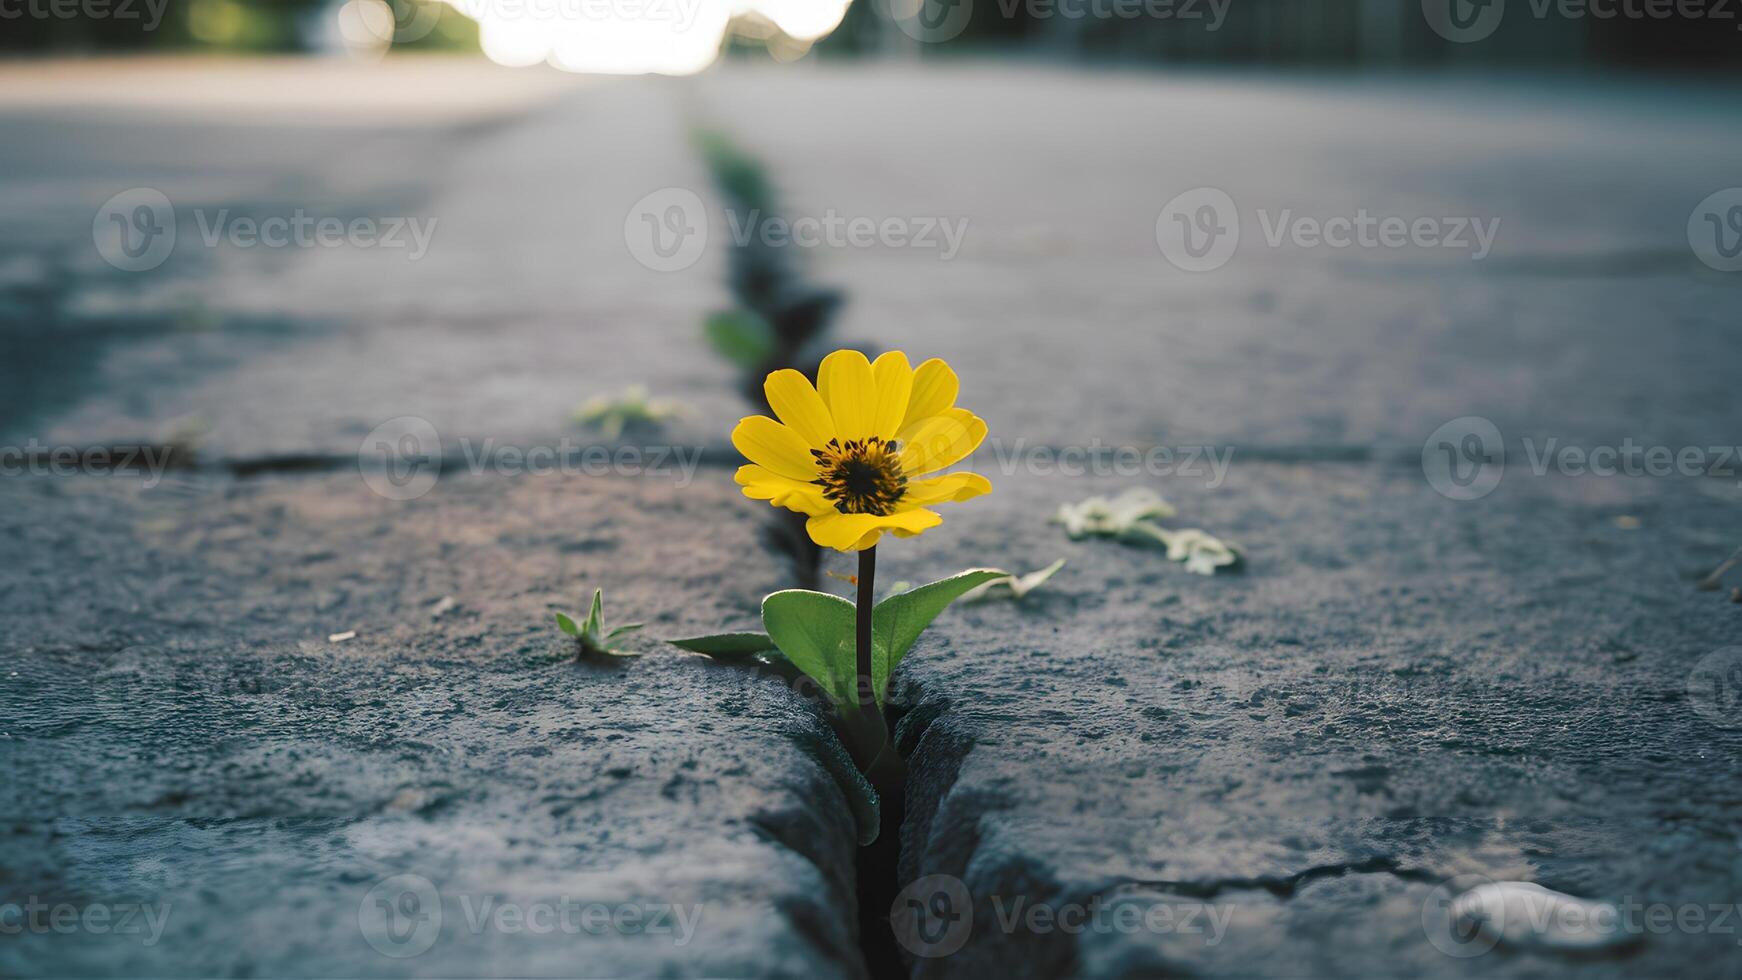 ai gegenereerd geel bloem groeit in barst Aan straat, symboliseert hoop foto